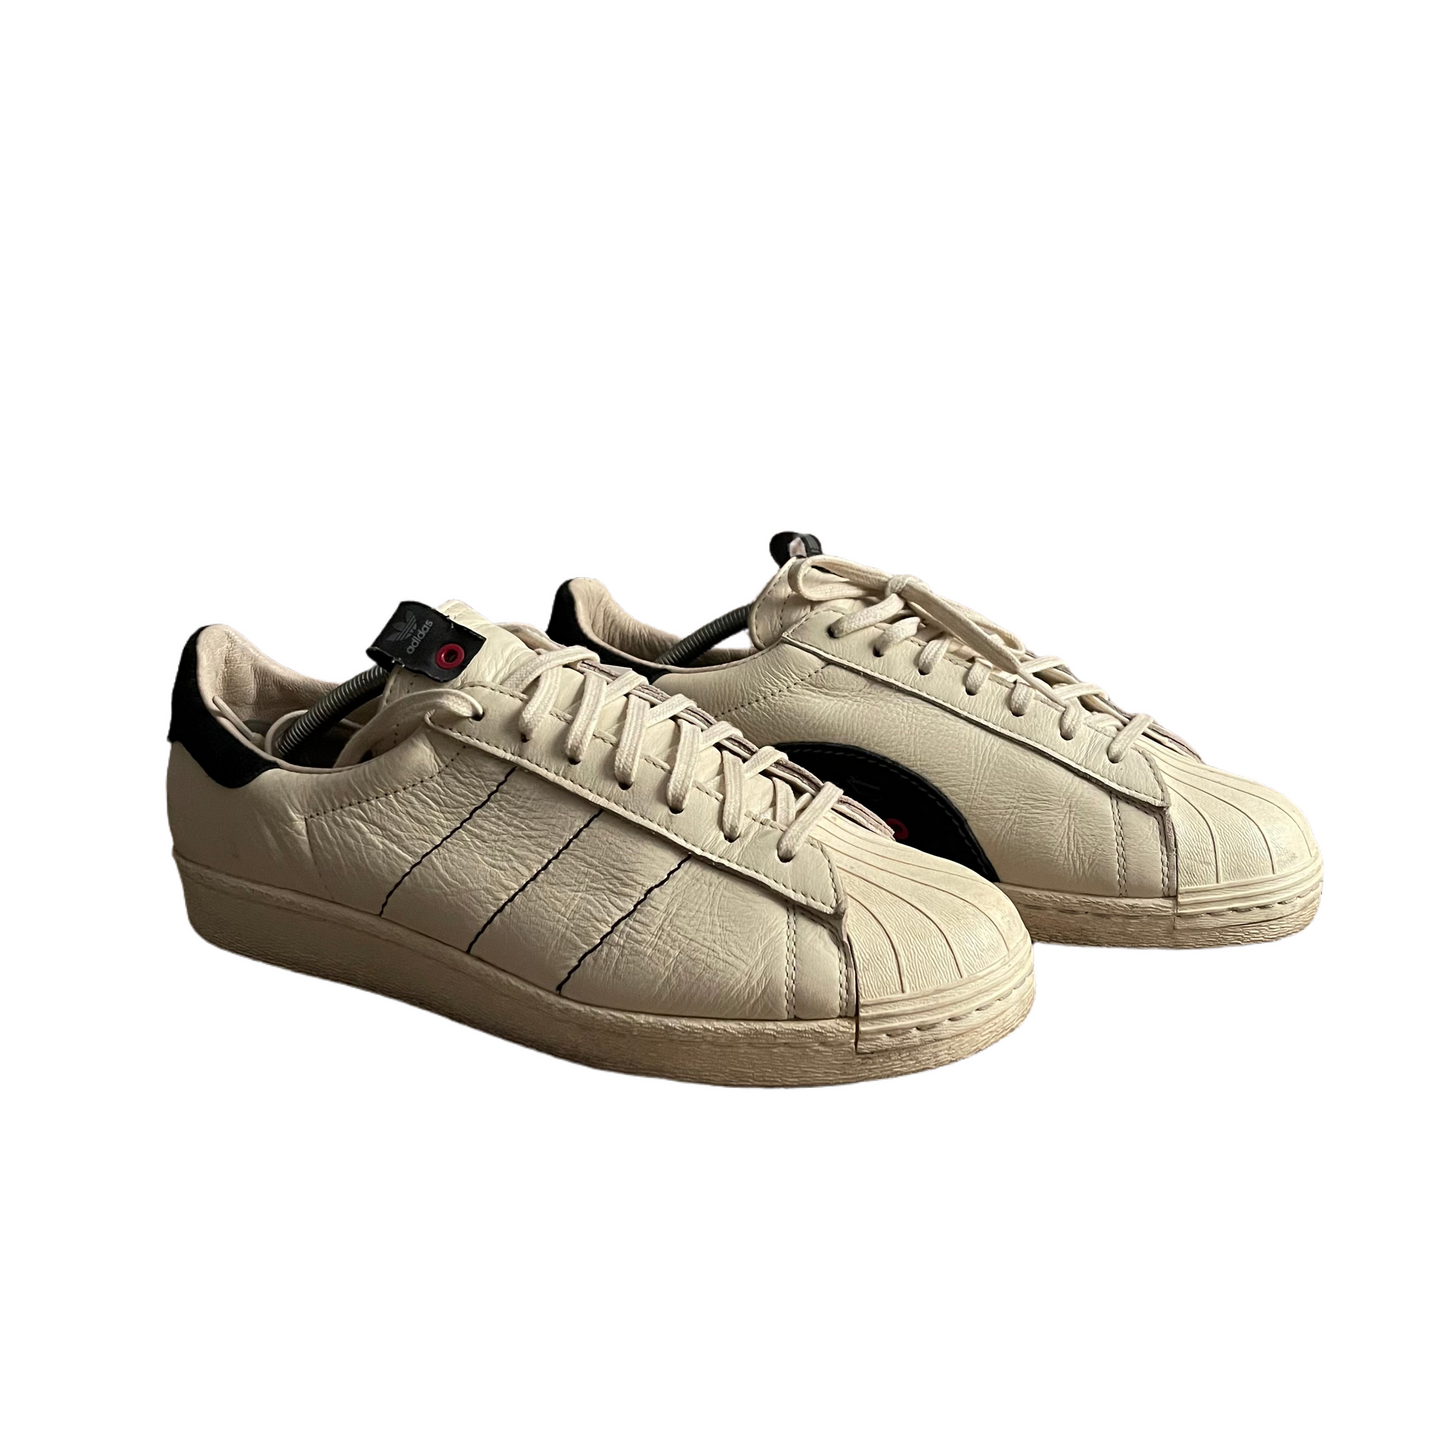 Adidas x Kasina Superstar 80s Sneakers